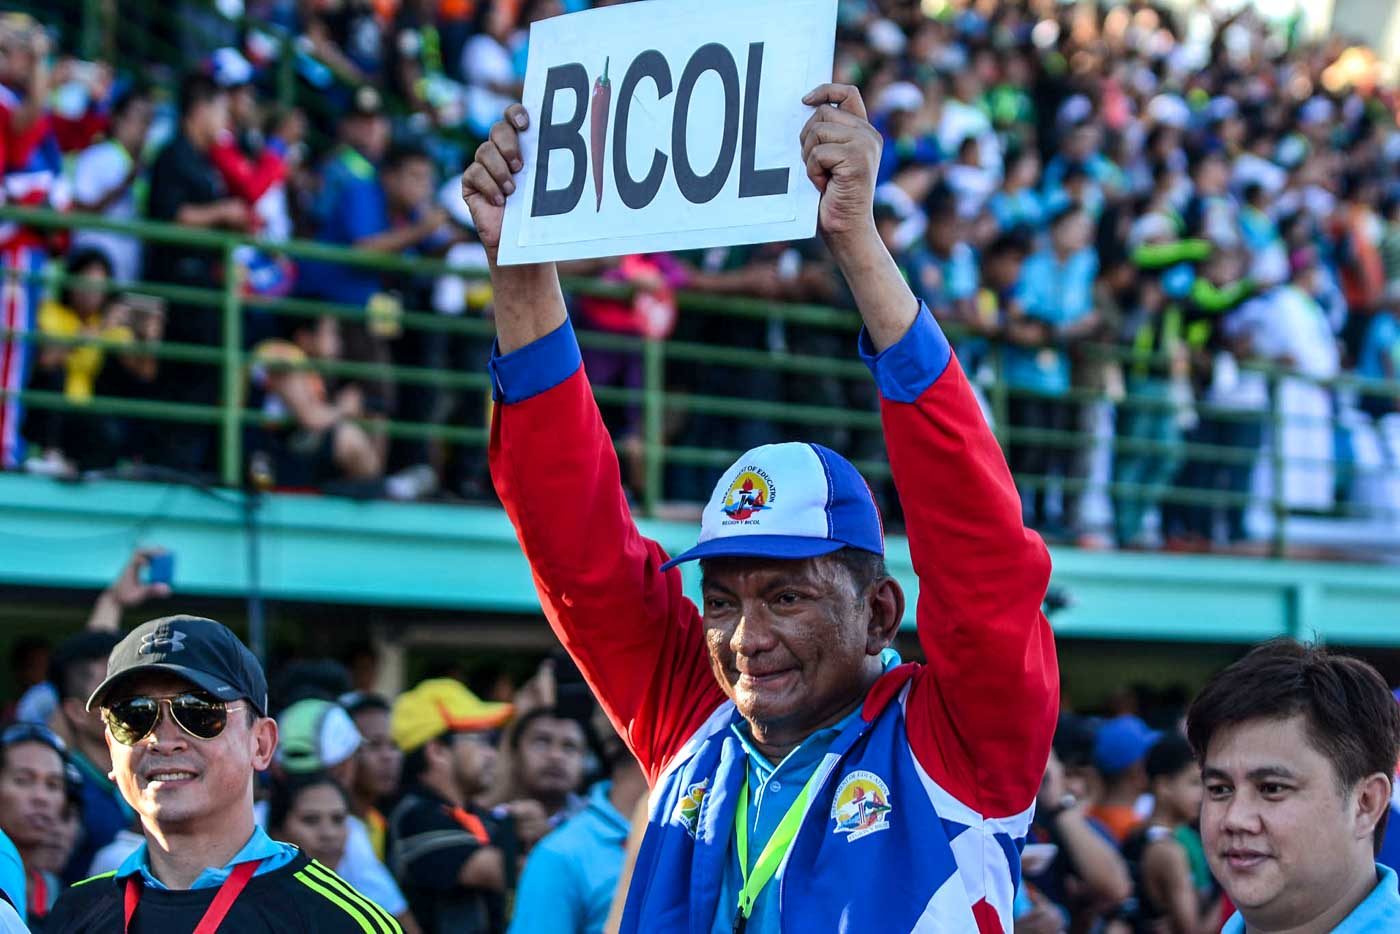 HOST. Albay Governor Joey Salceda proudly holds up Bicol Region's sign. Photo by Roy Secretario/Rappler 